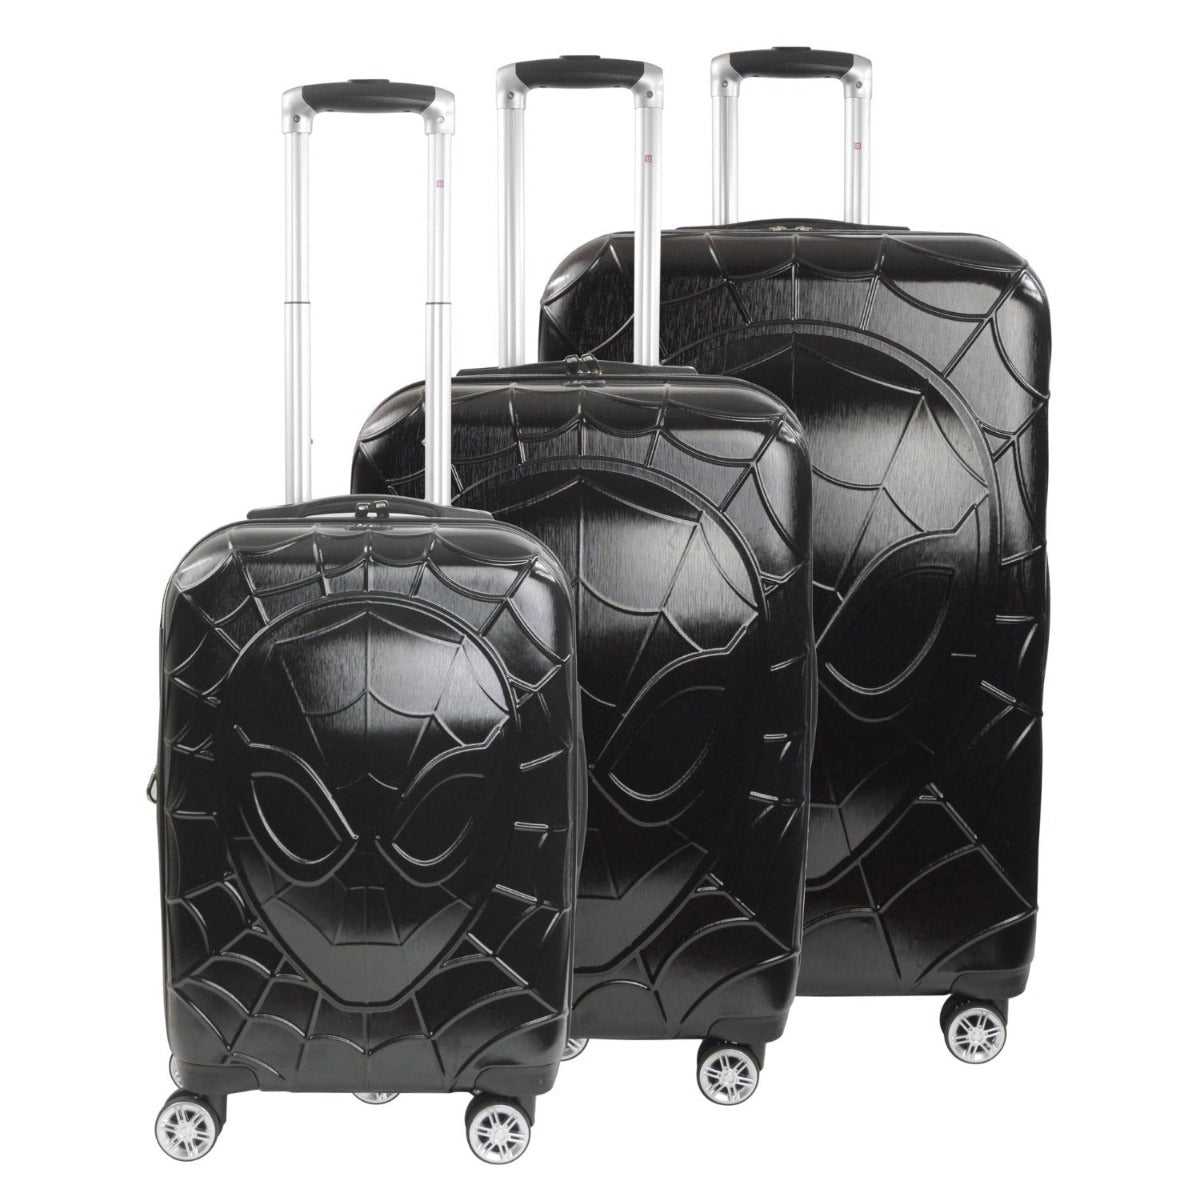 Marvel Spiderman Spinner Suitcase Luggage 3pc Set Black